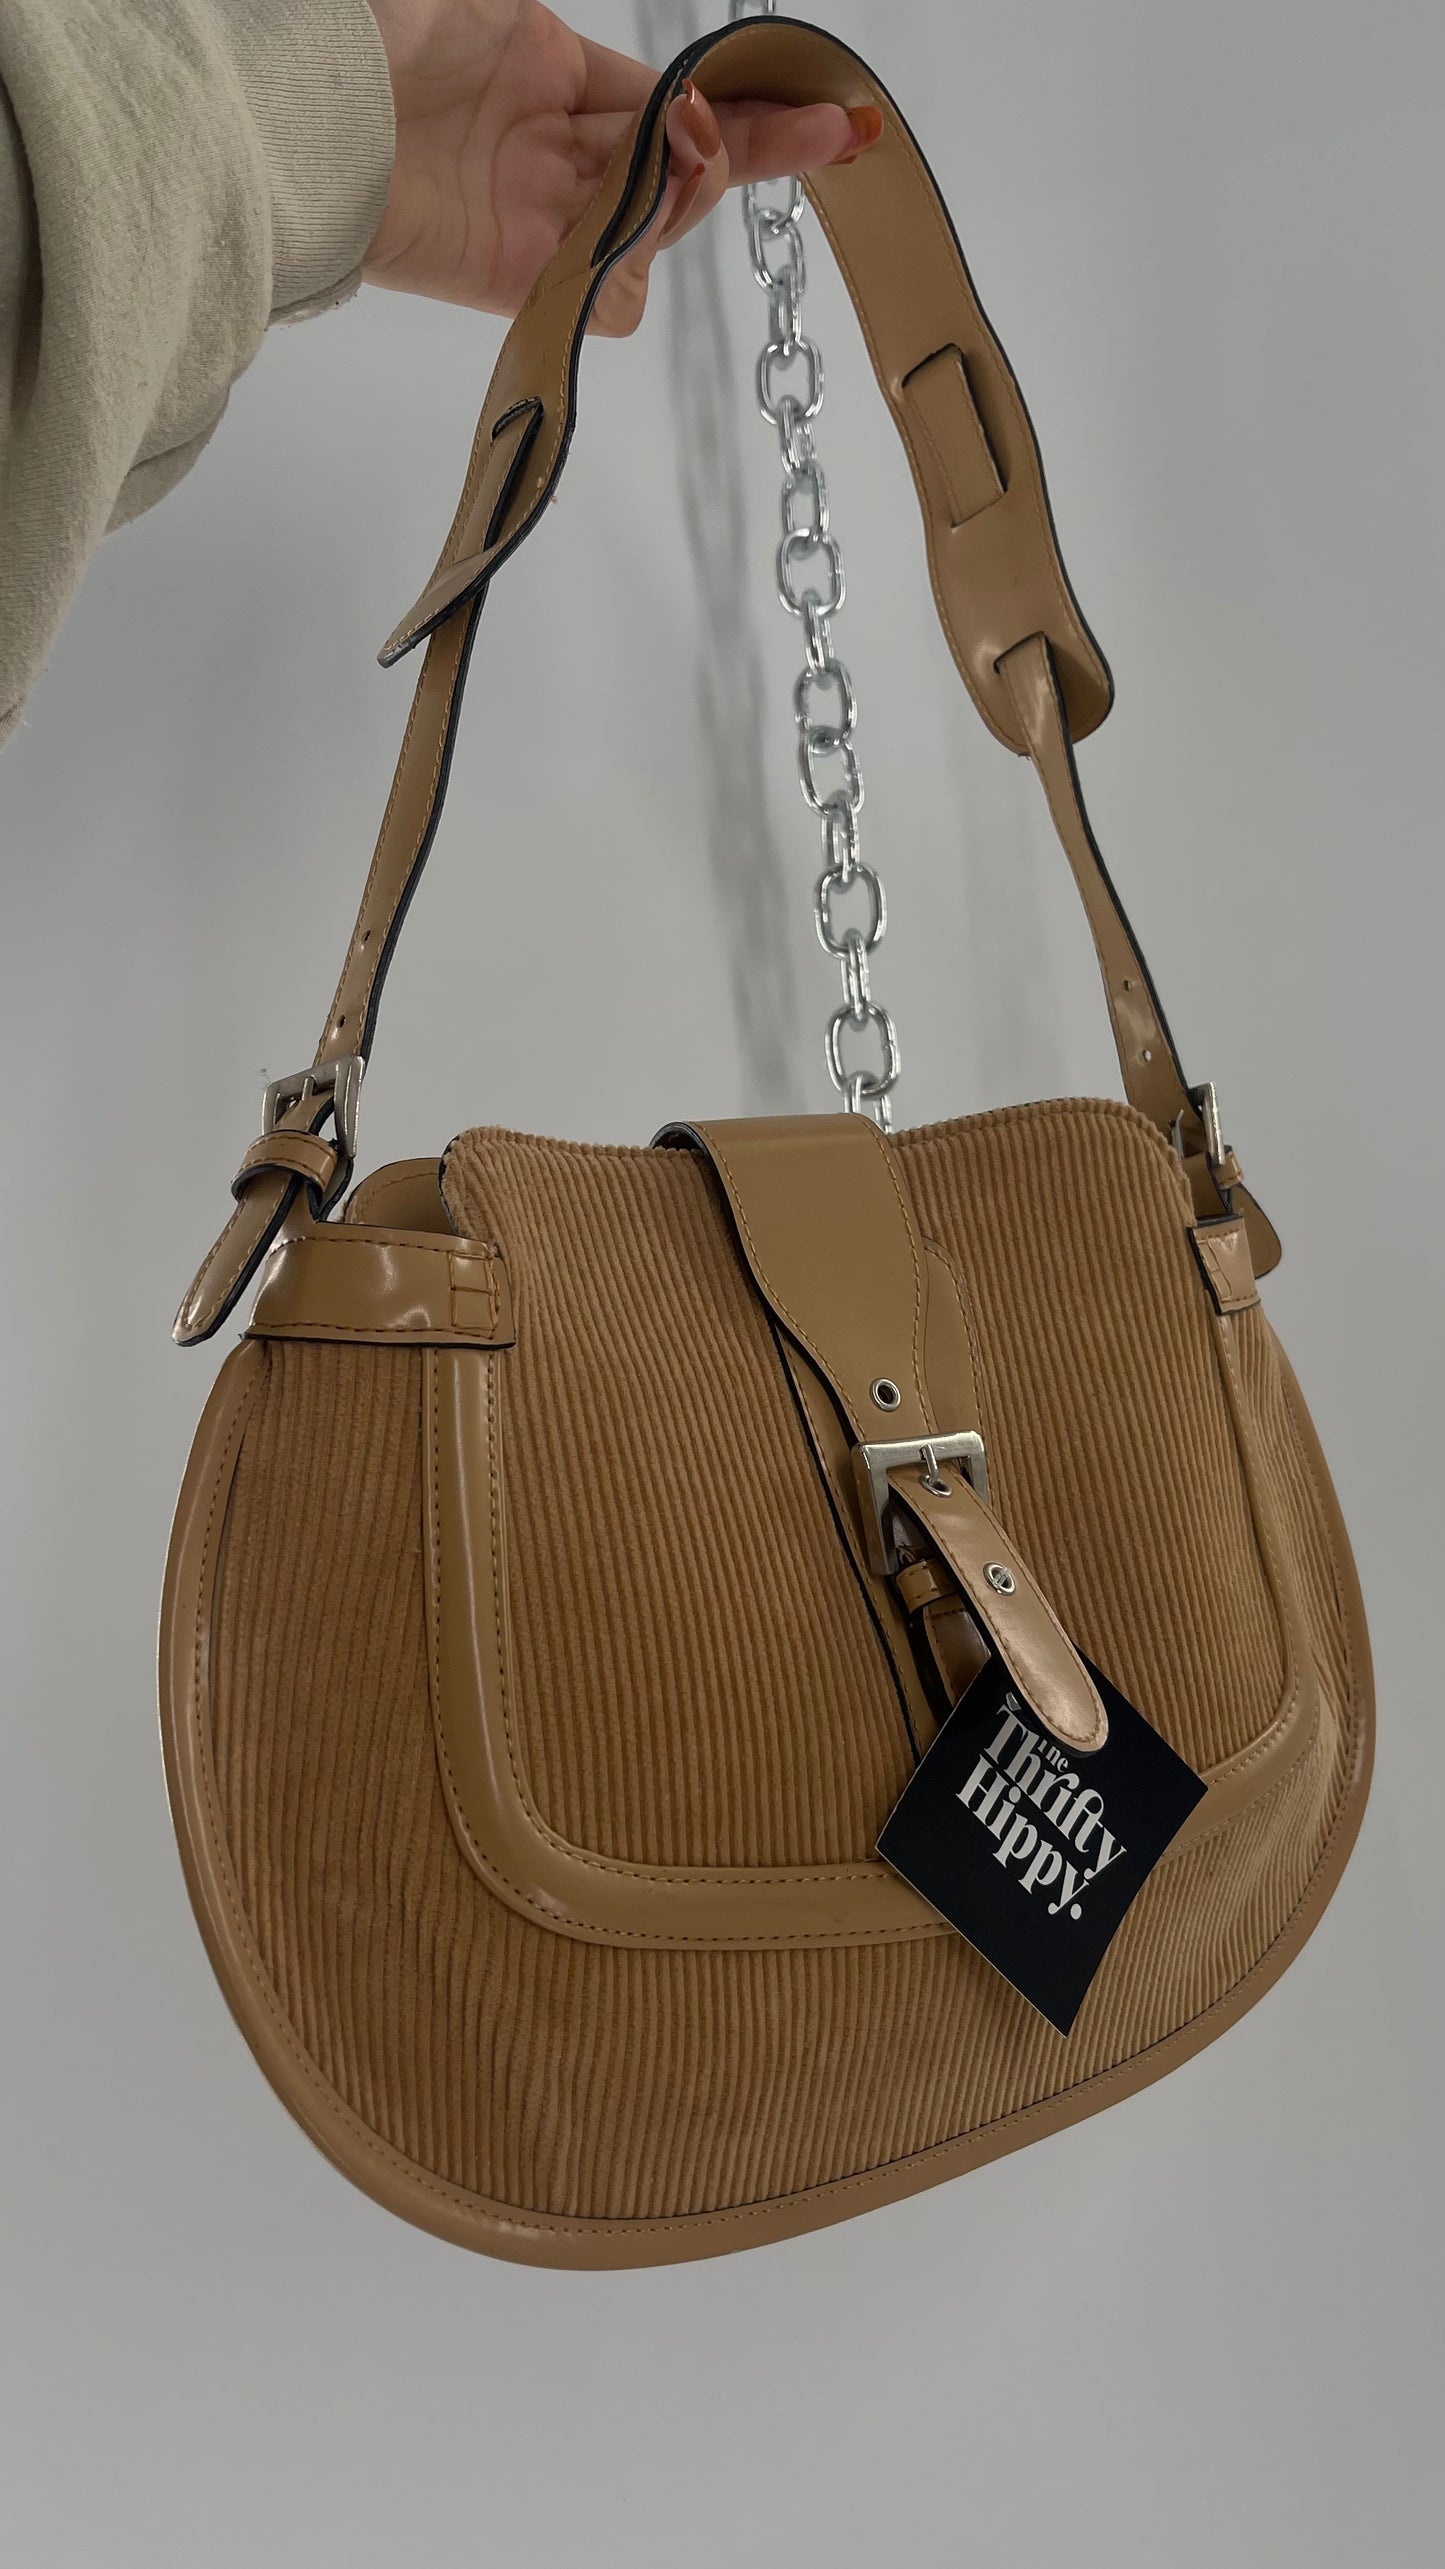 Vintage Tan Corduroy Bag with Buckle Closure